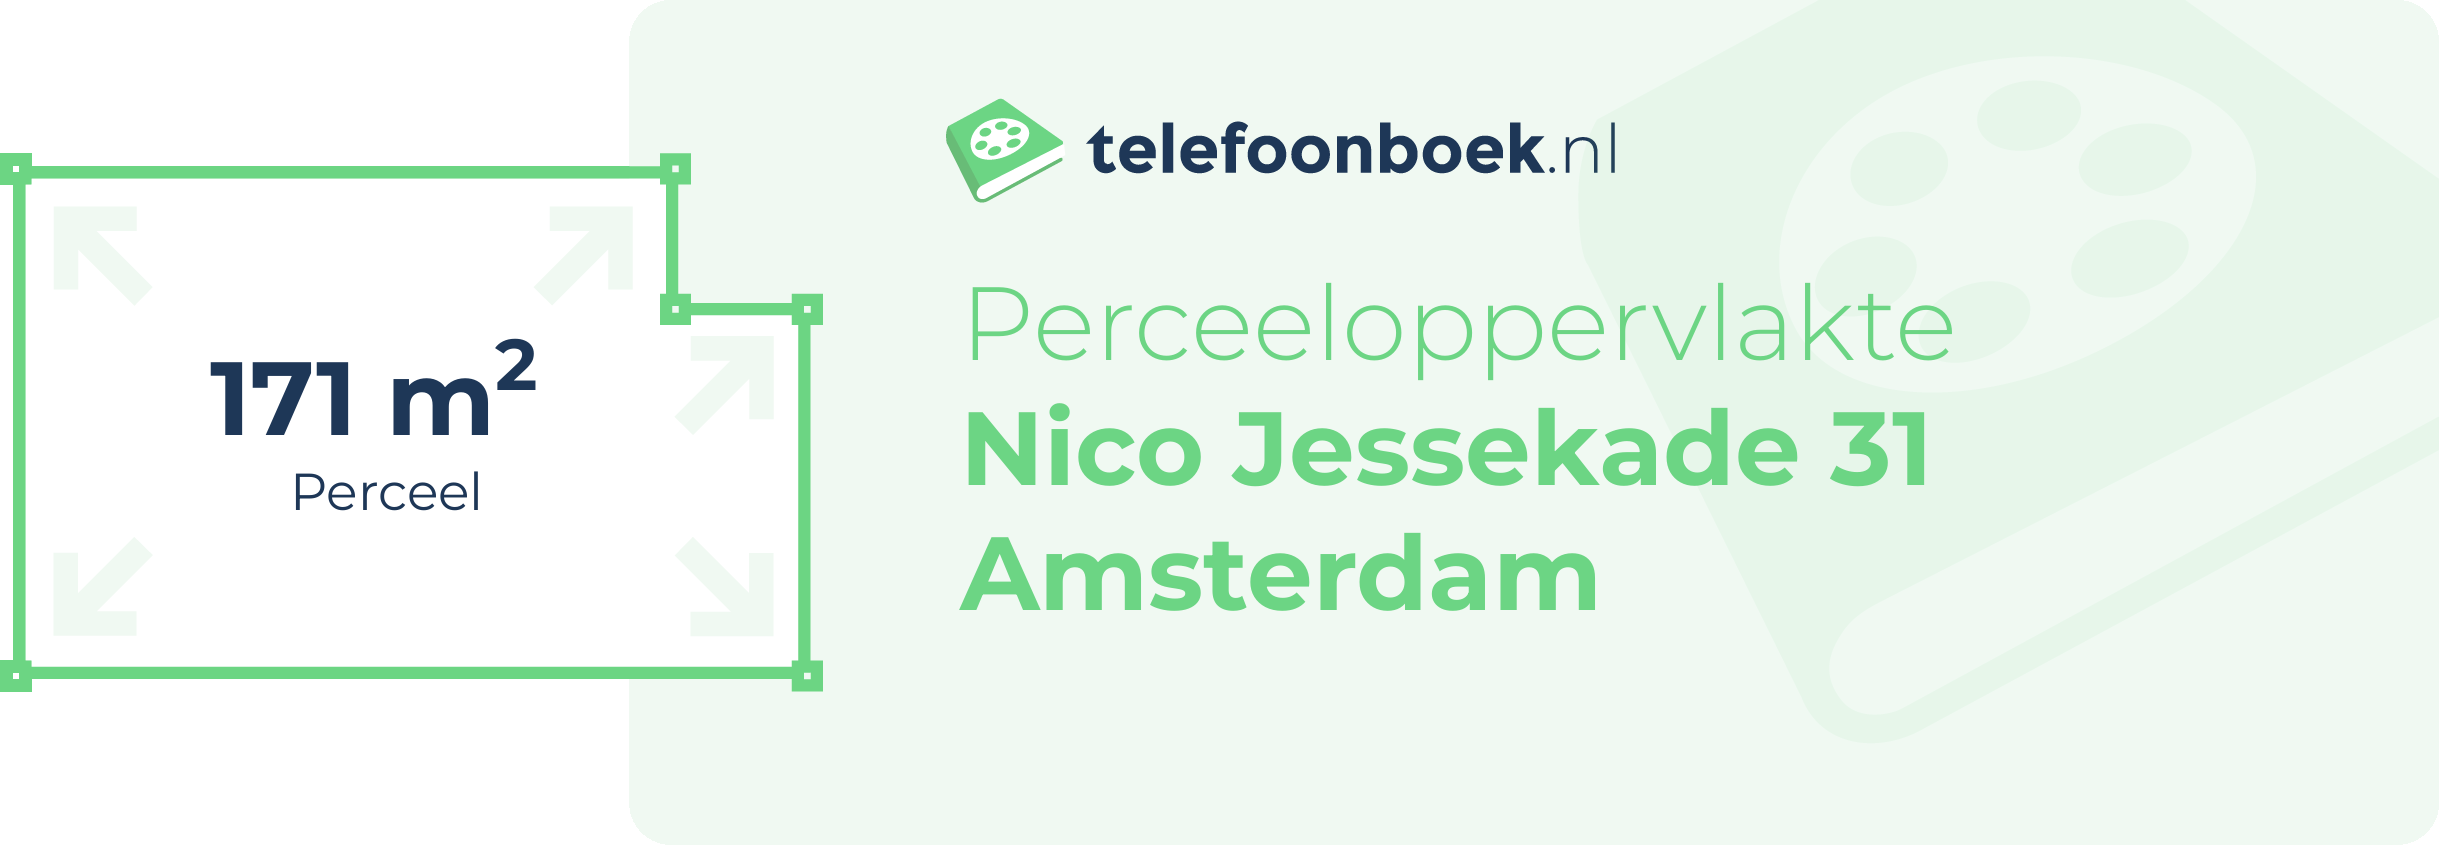 Perceeloppervlakte Nico Jessekade 31 Amsterdam